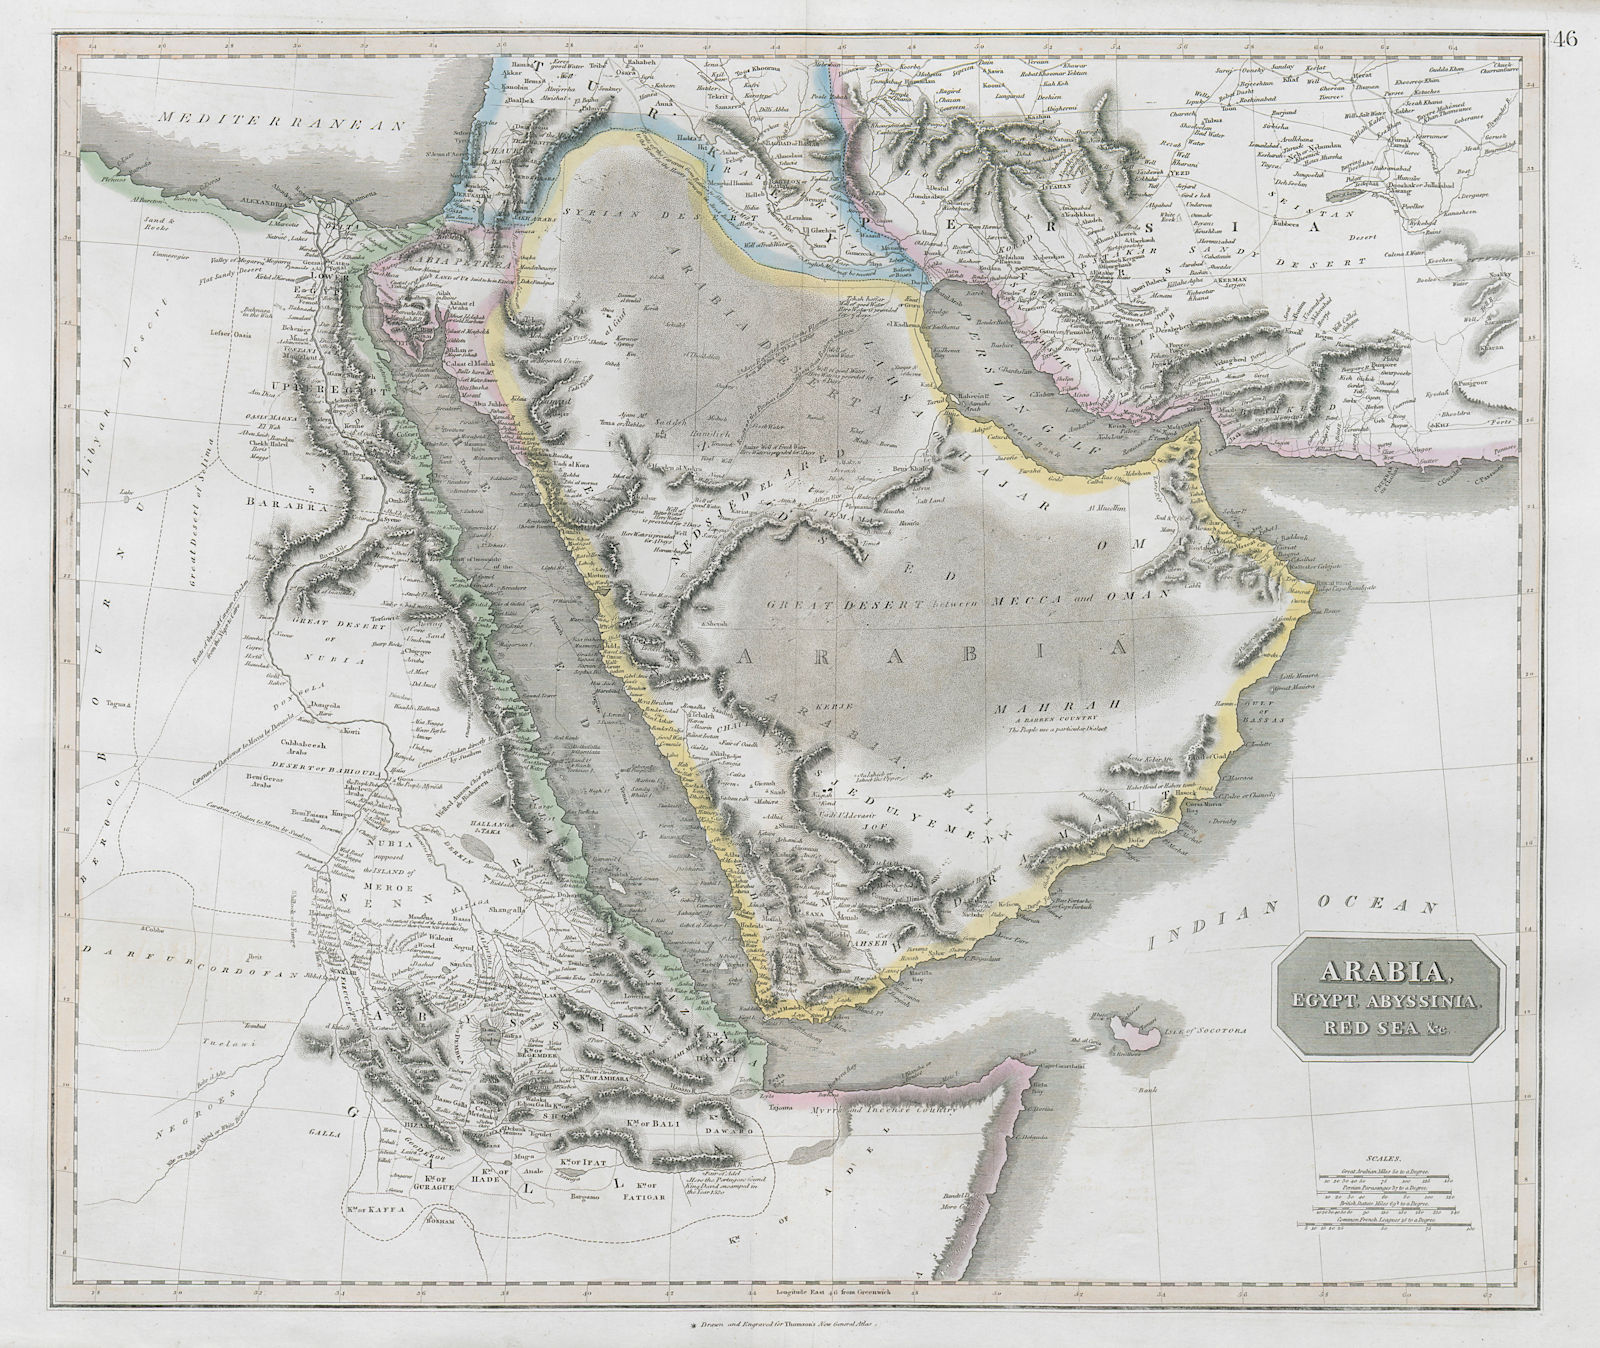 Arabia, Egypt, Abyssinia, Red Sea. Zara river (Dubai Creek). THOMSON 1830 map